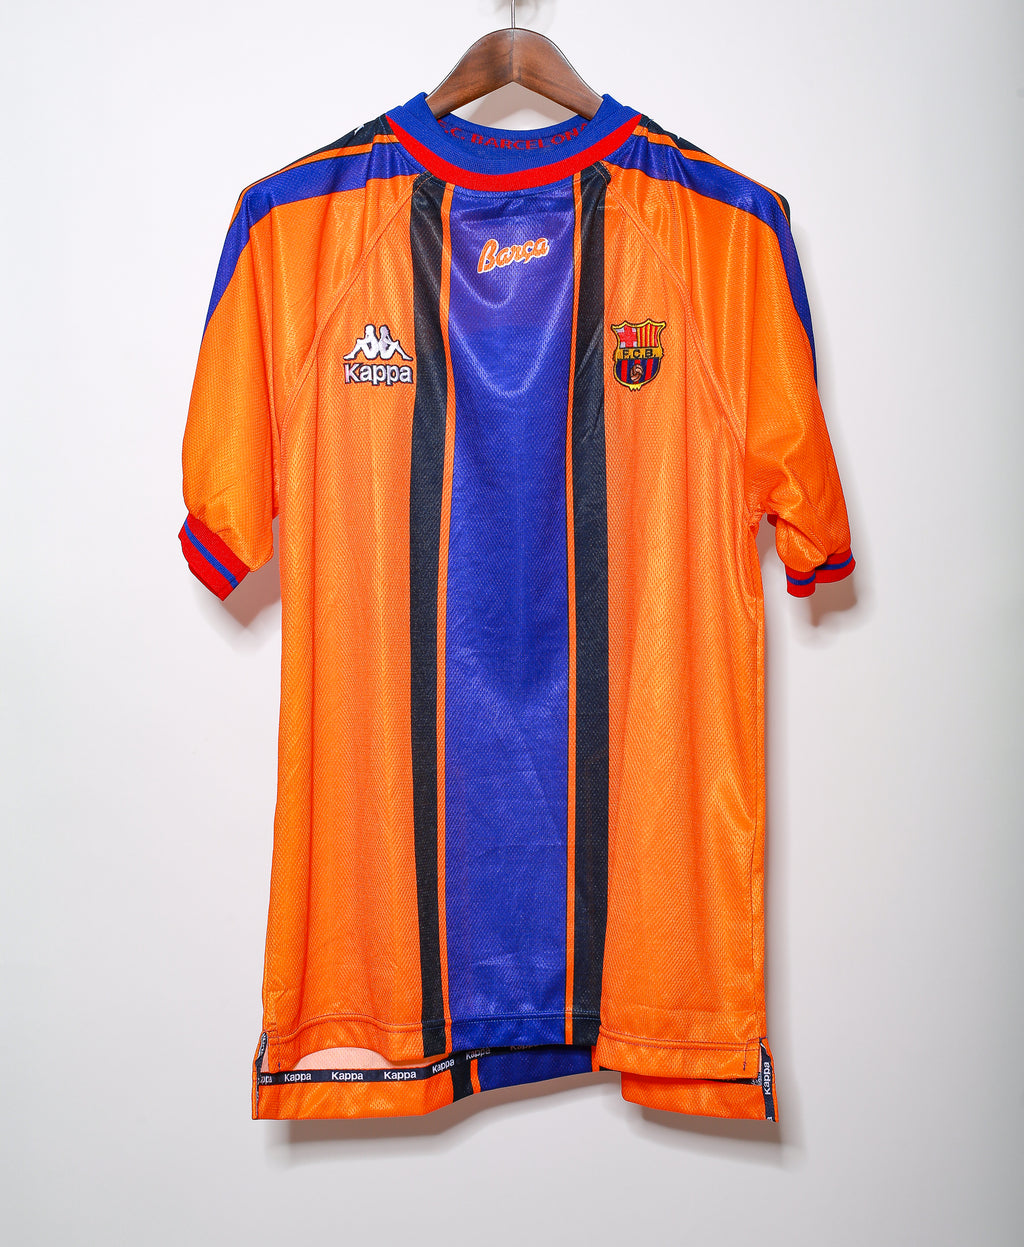 barcelona 1997 away kit